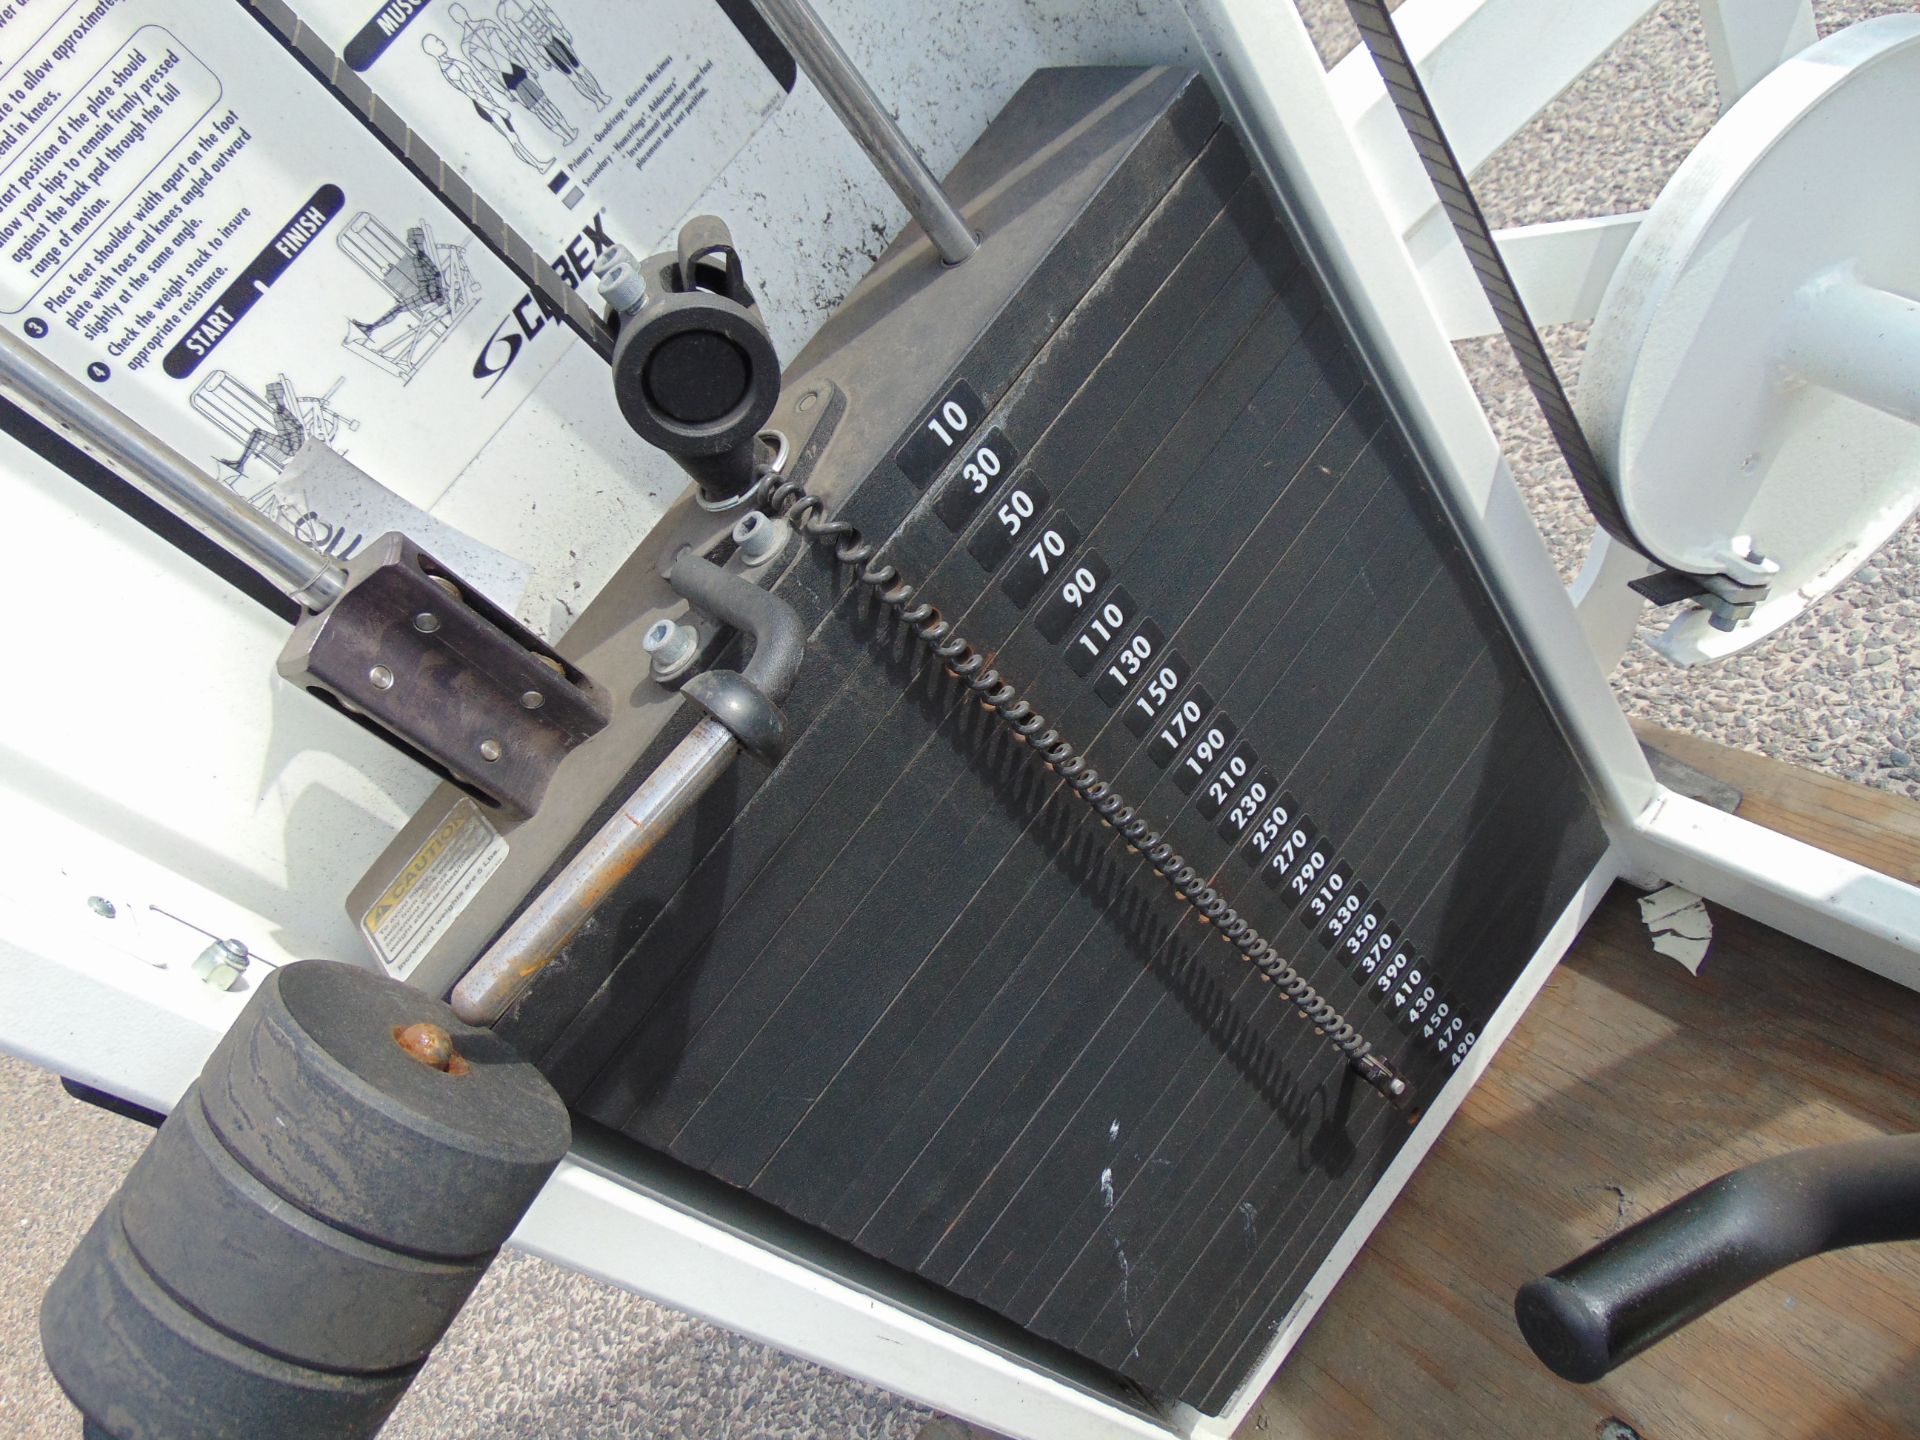 Cybex Seated Leg Press Exercise Machine - Image 7 of 10